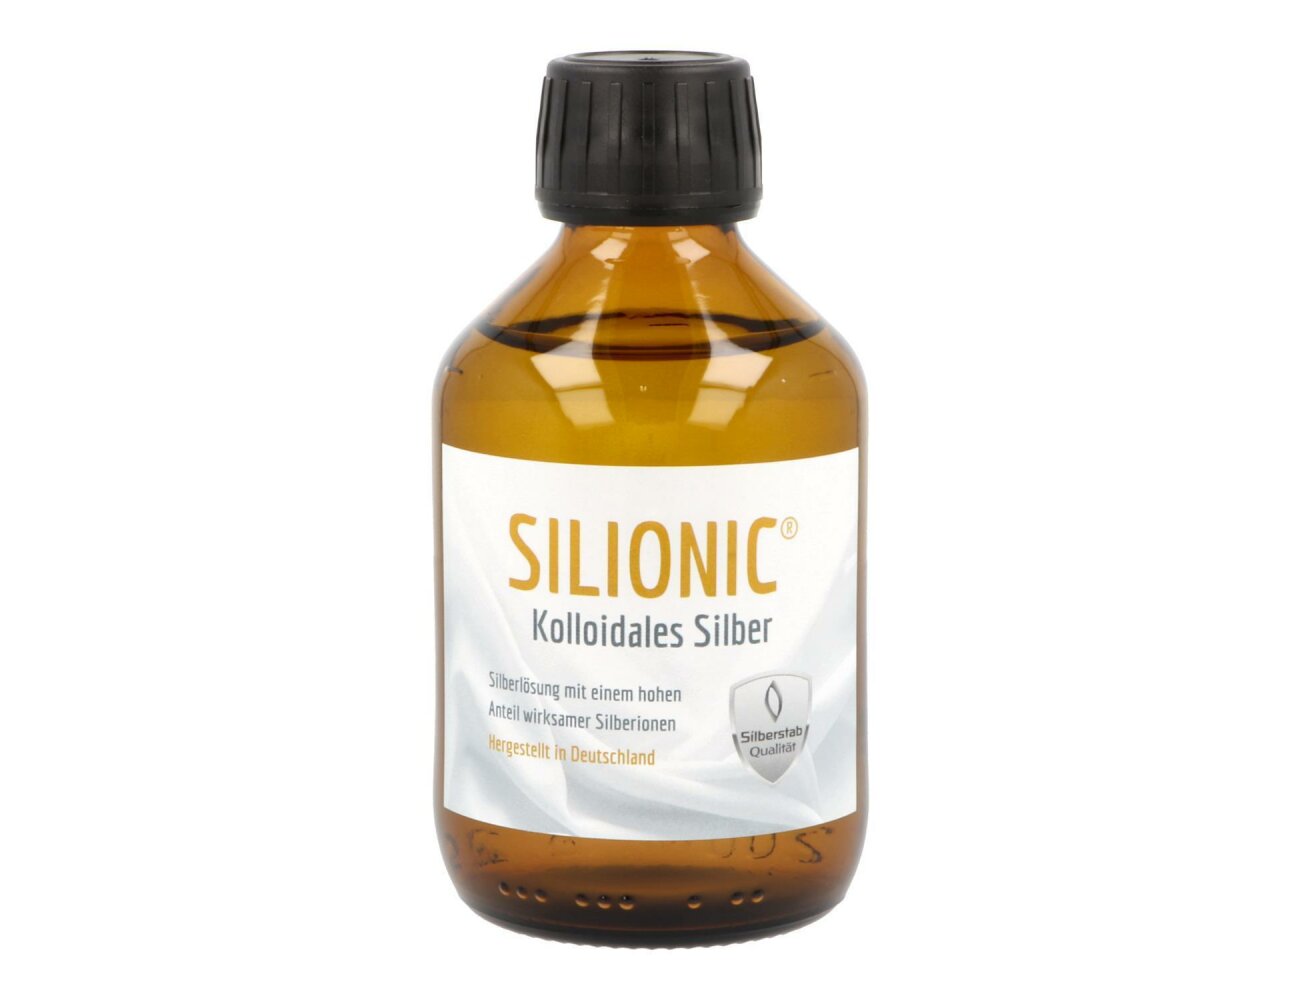 Silionic Kolloidales Silber, 25 ppm, 200 ml